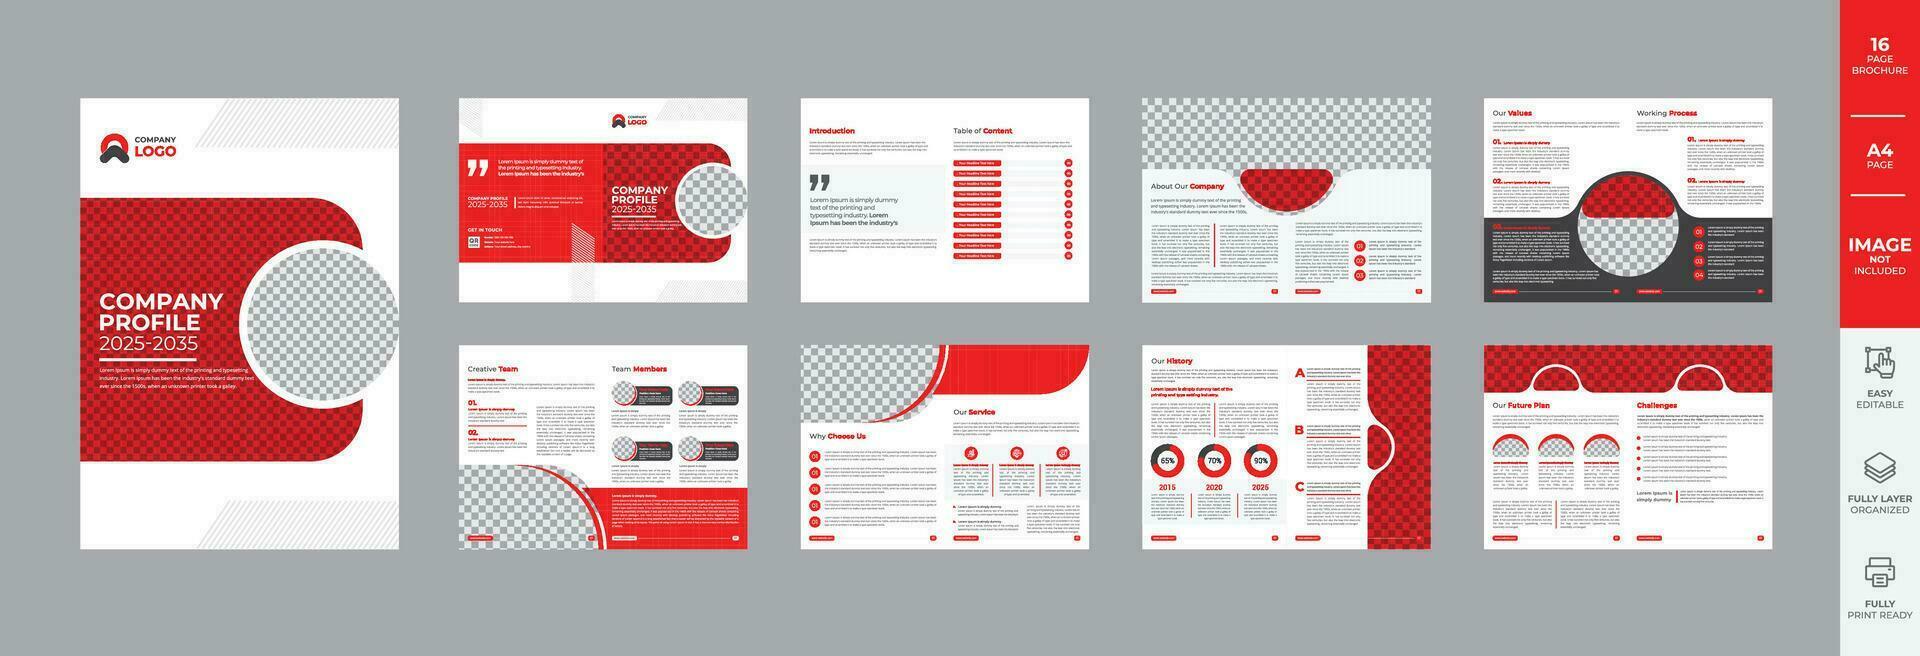 empresa perfil o anual reporte o negocio propuesta folleto diseño con rojo moderno formas vector